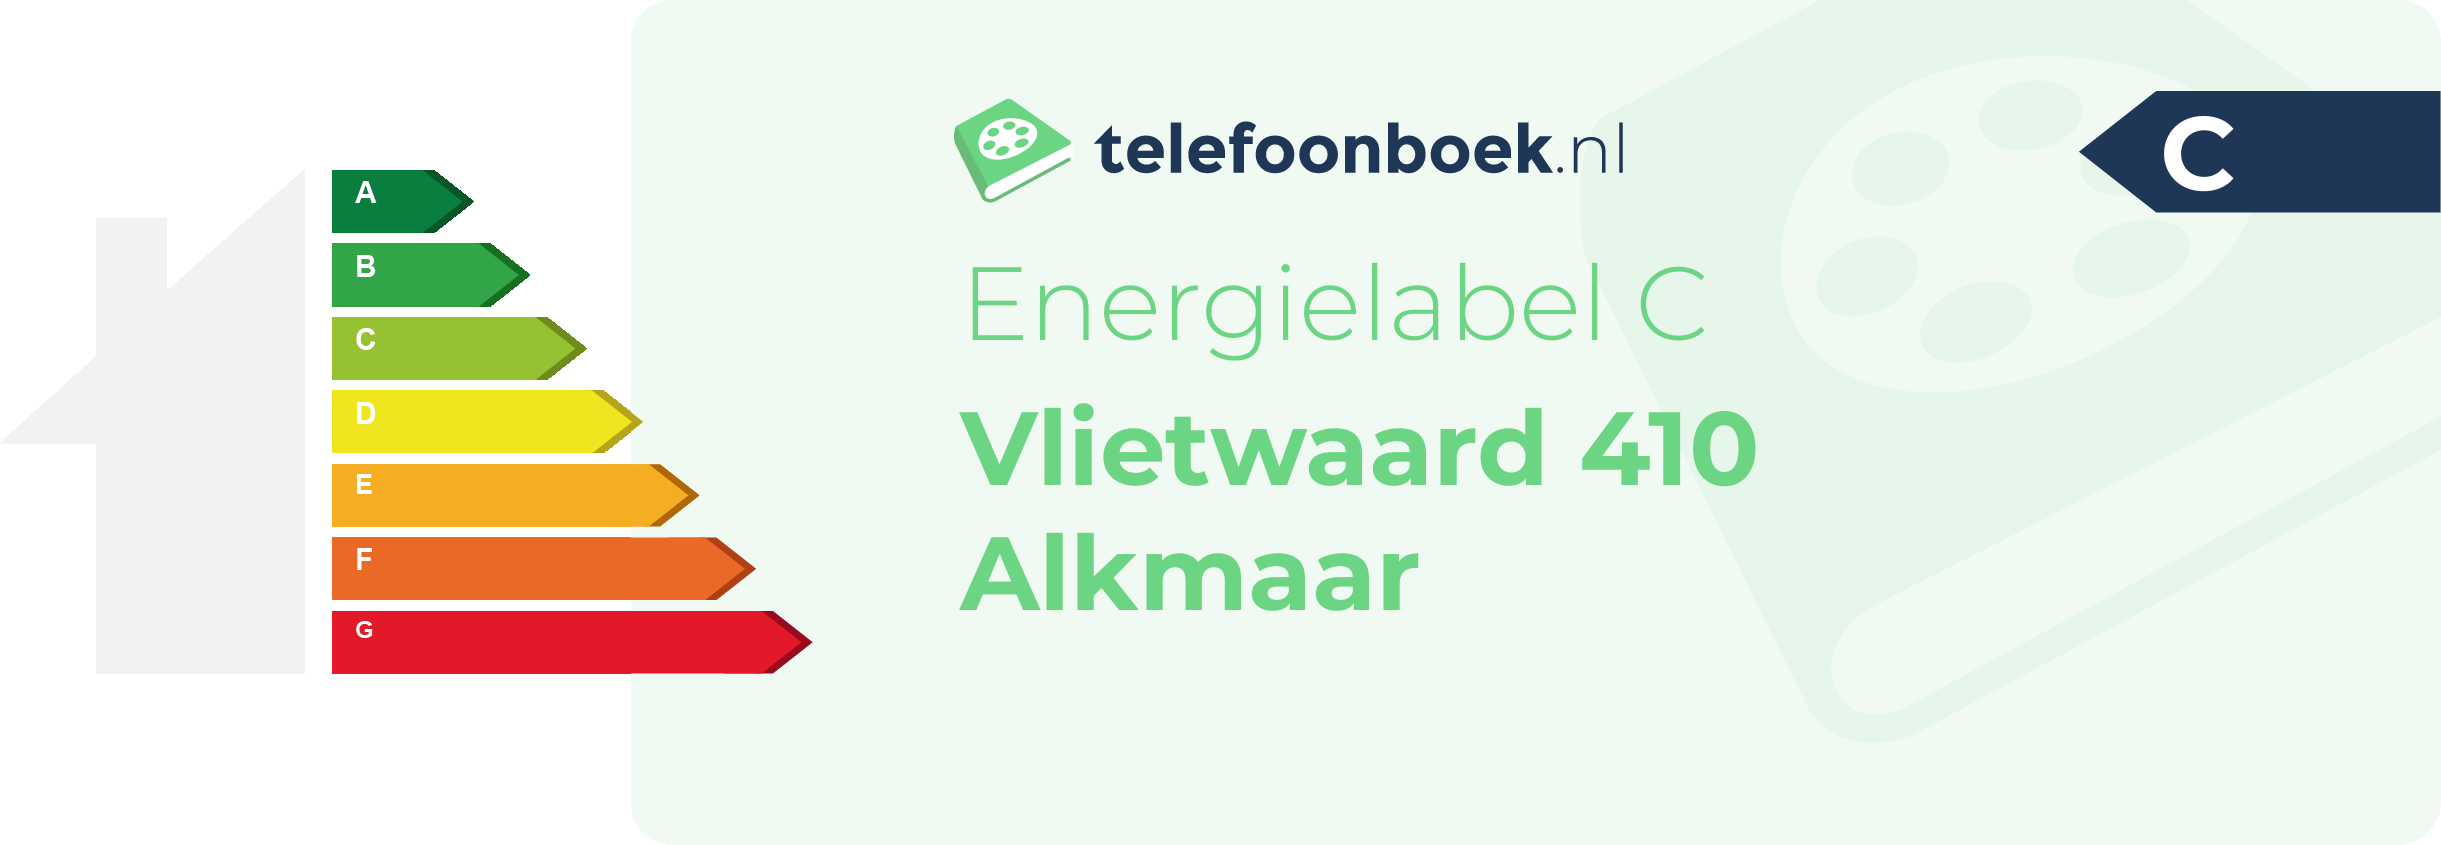 Energielabel Vlietwaard 410 Alkmaar